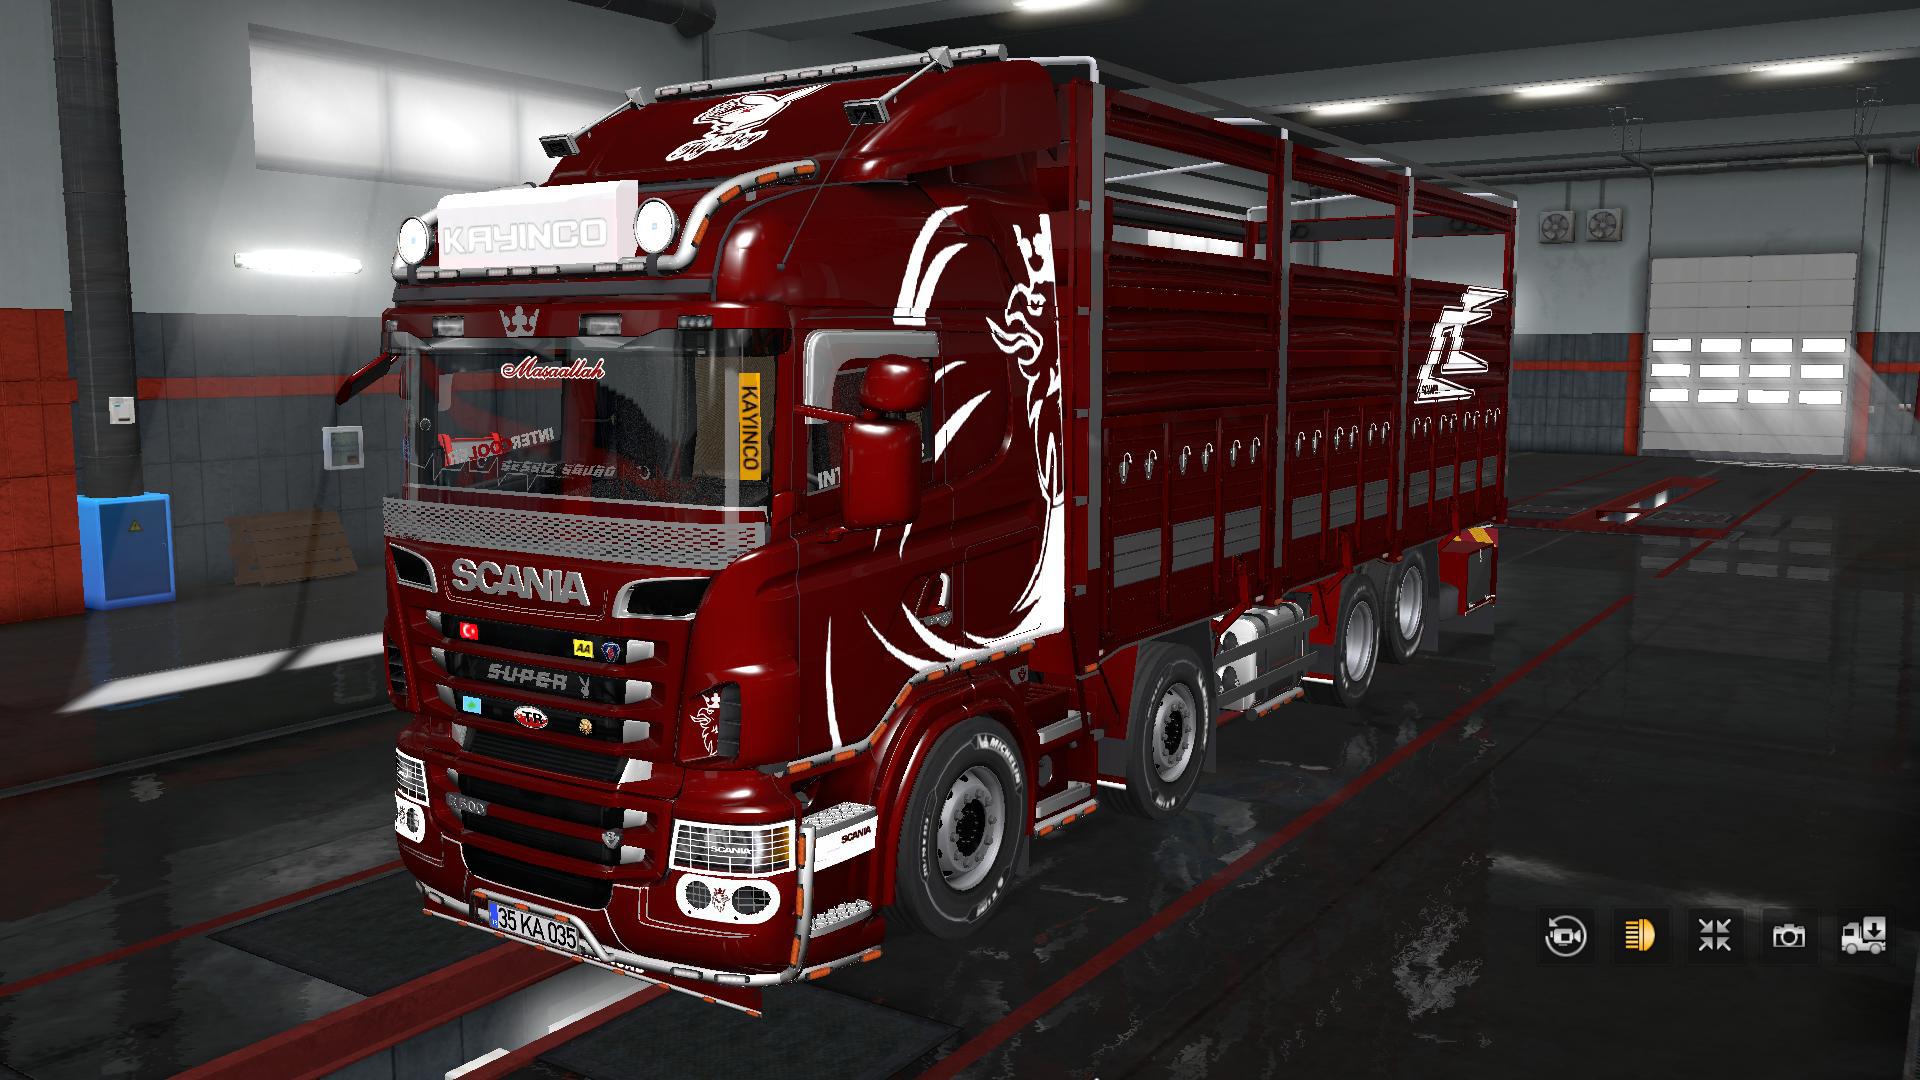 Ets Scania R V X Euro Truck Simulator Mods Club 2115 Hot Sex Picture 9591